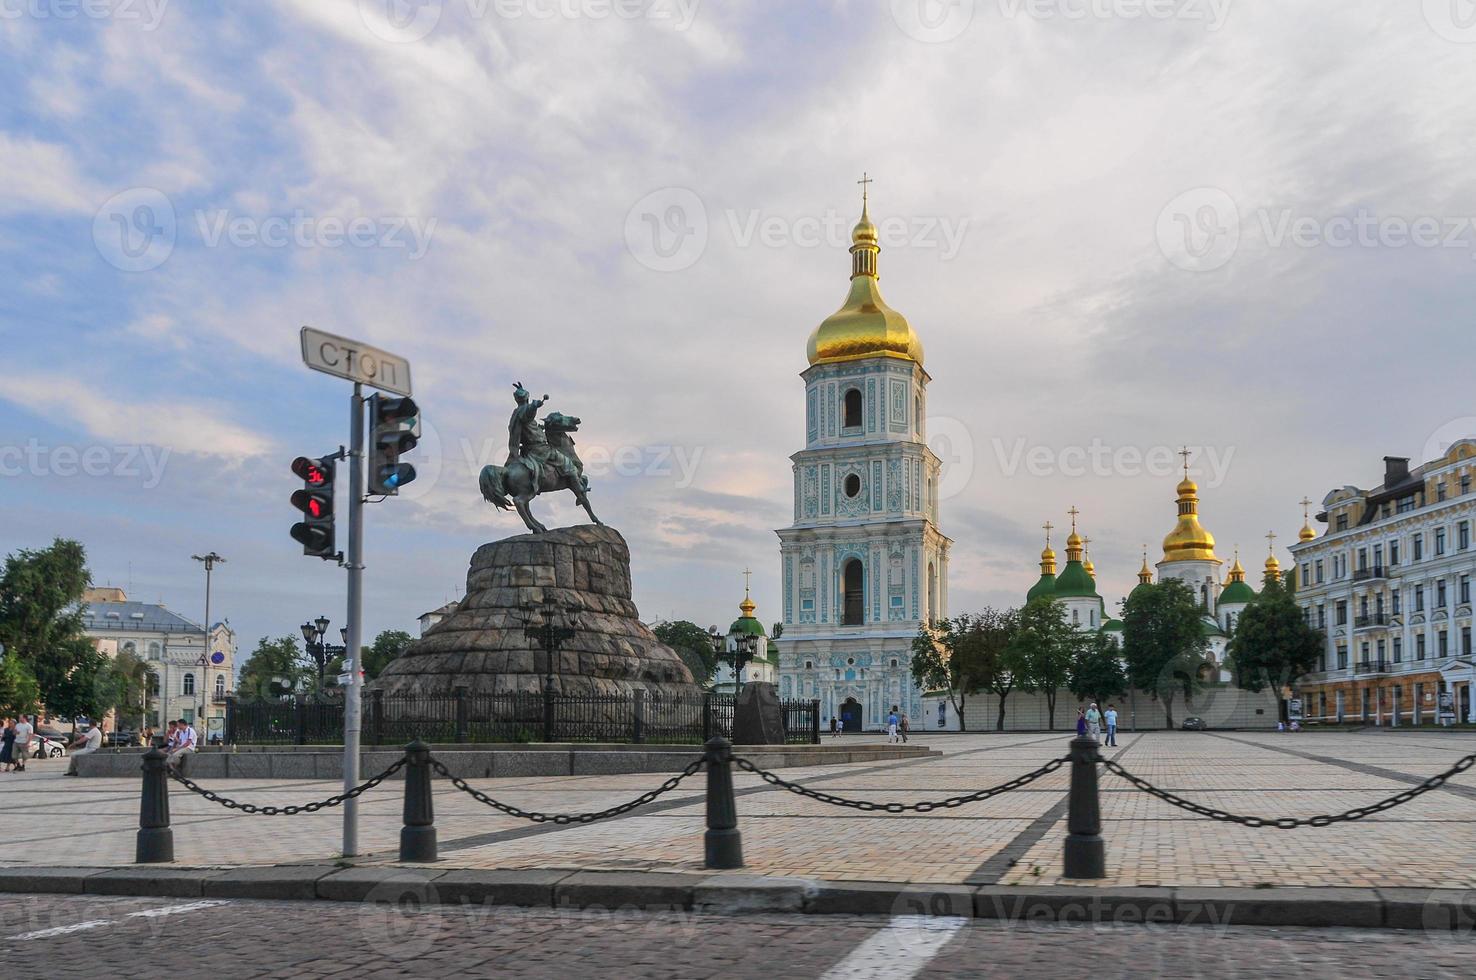 place de sofia - kiev, ukraine photo